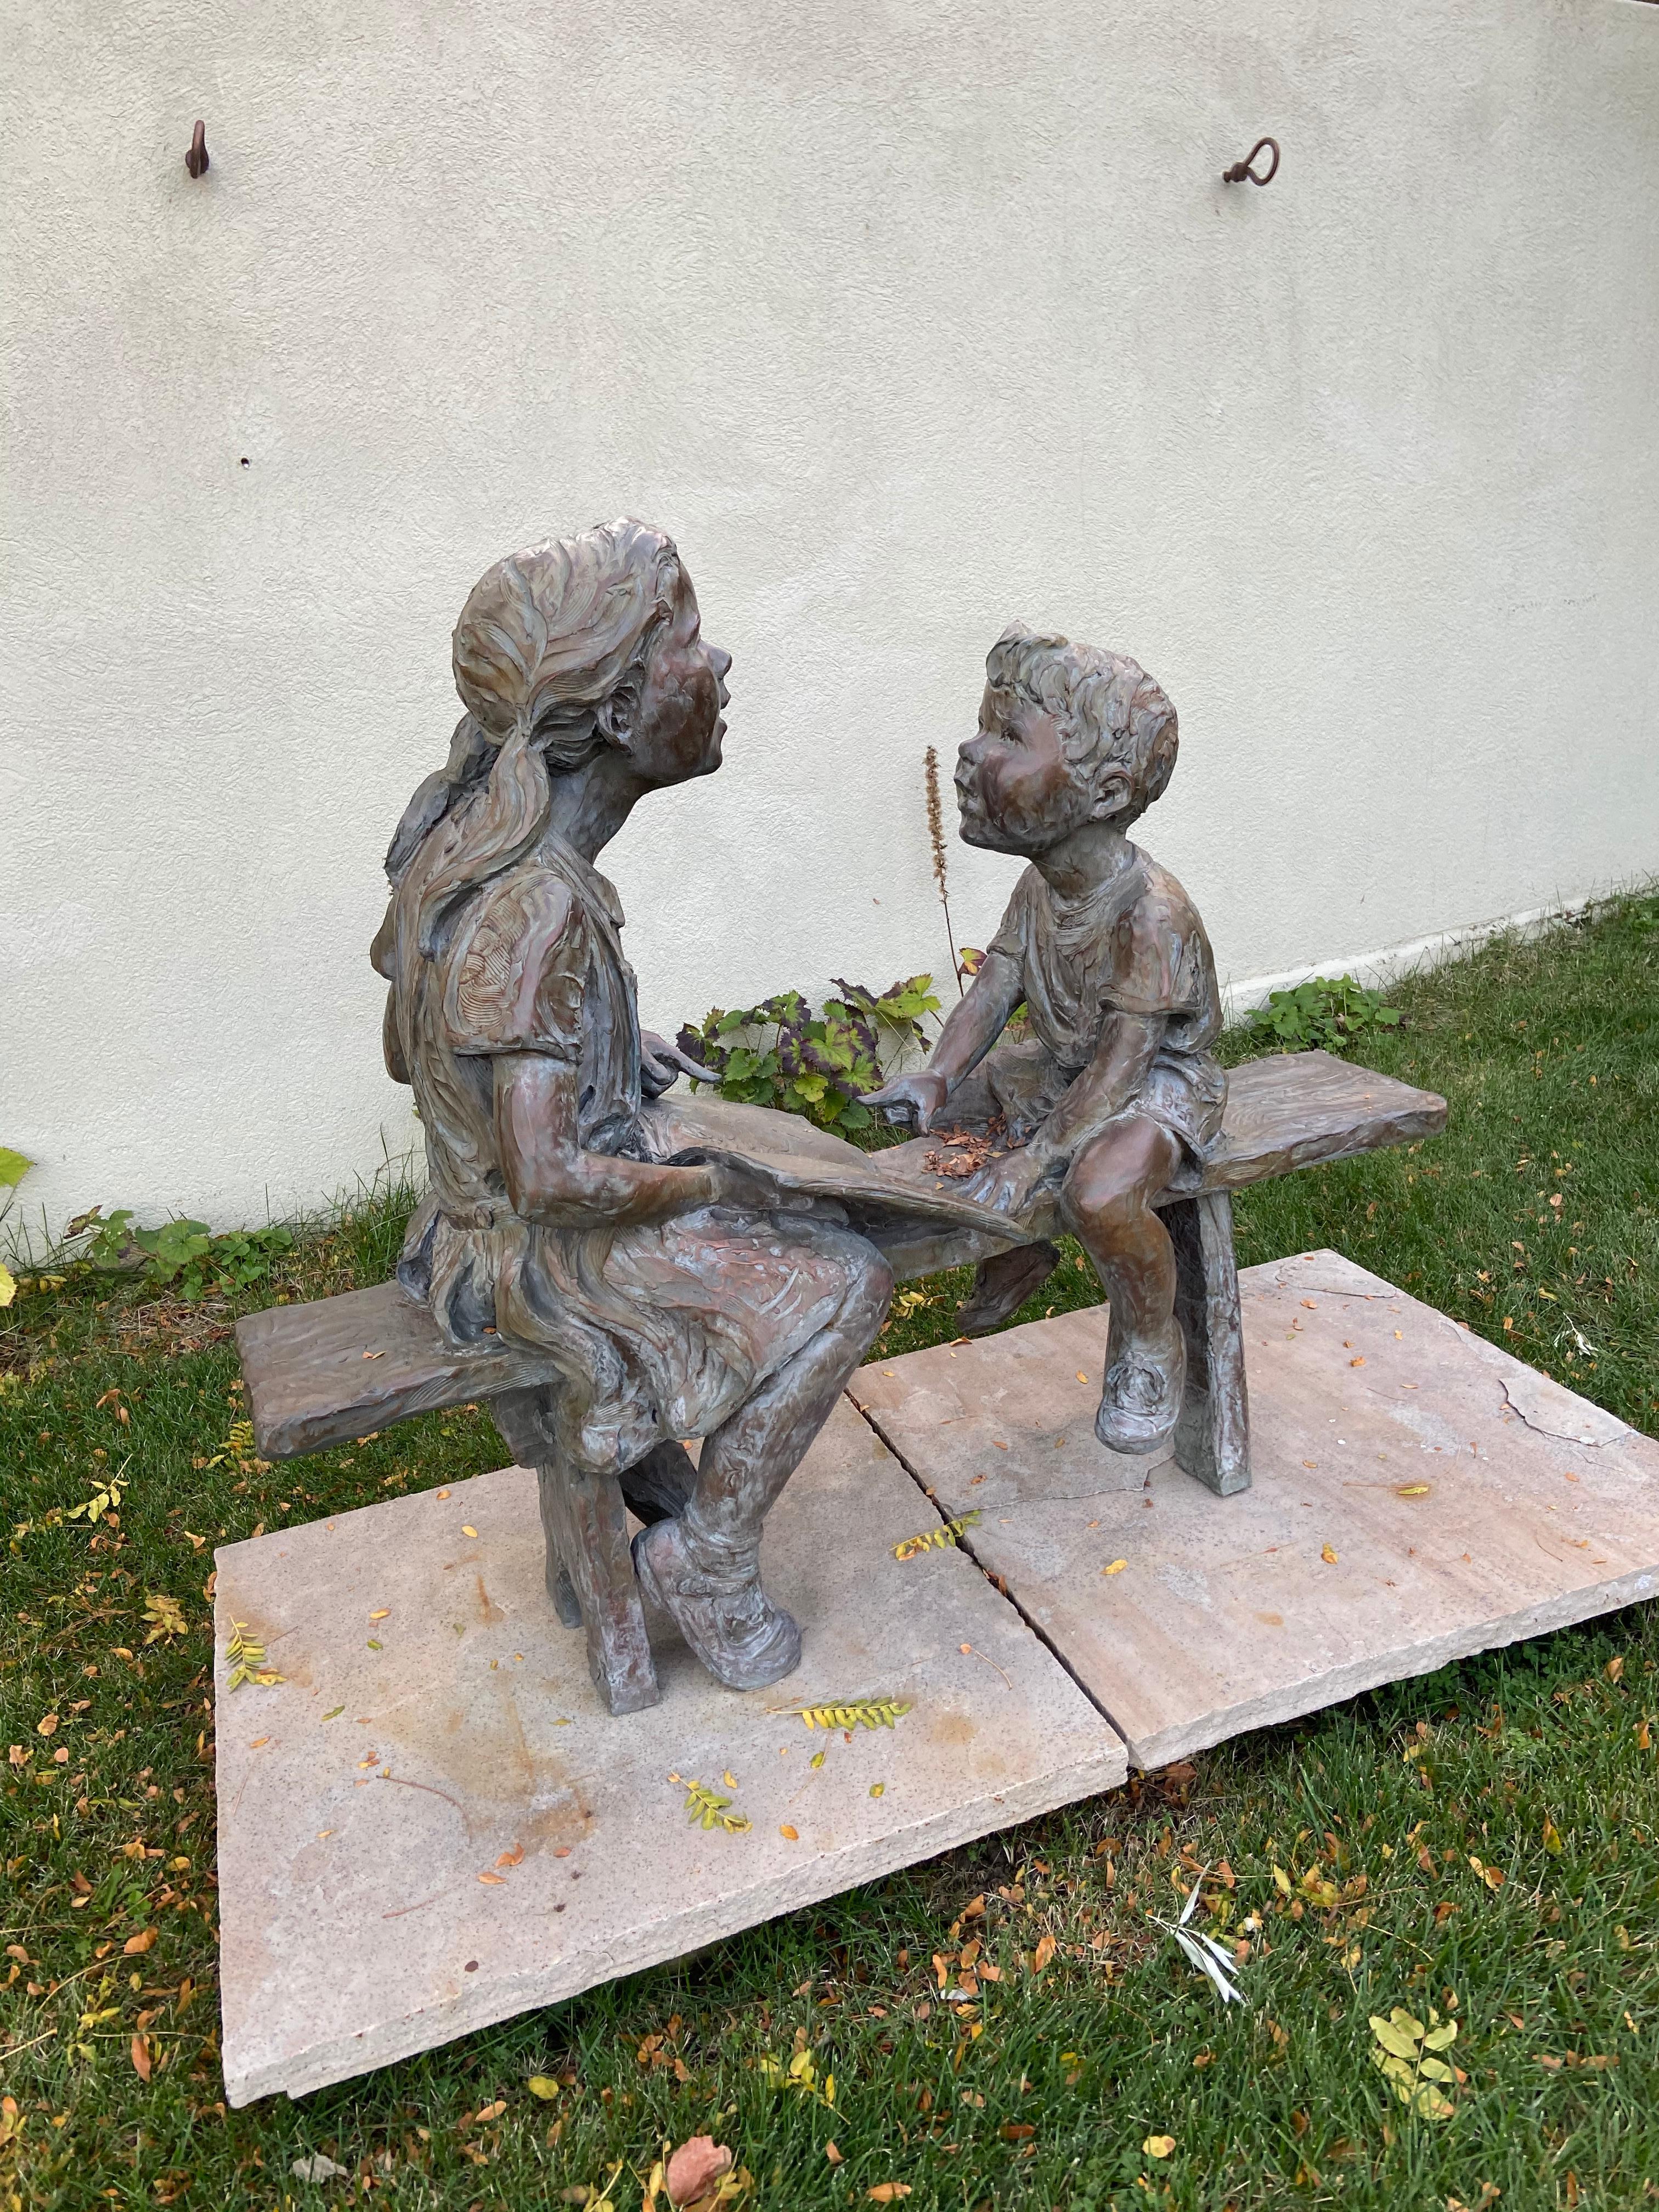 A World to Teach by Jane DeDecker
Figurative Bronze Sculpture functioning as bench
44x53x22